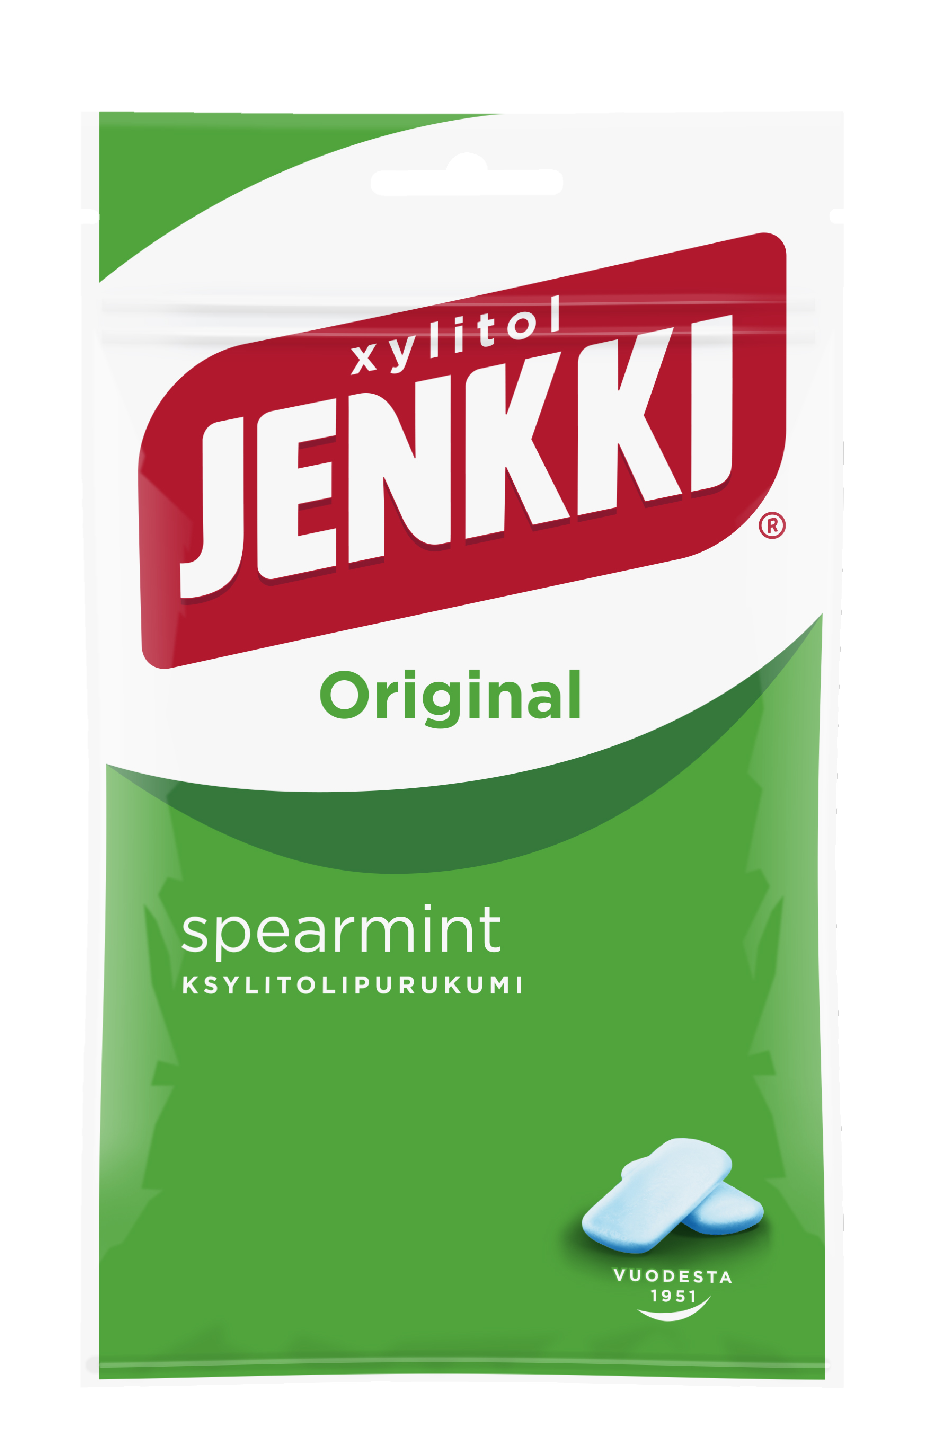 Jenkki Original Spearmint ksylitolipurukumi 100g QPA